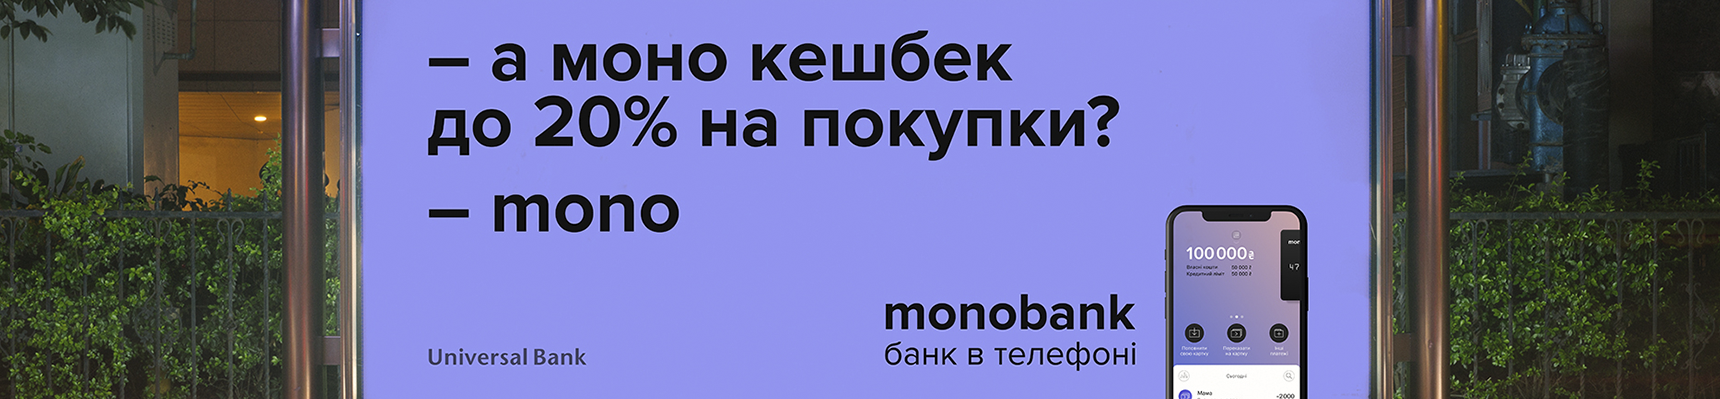 monobank2